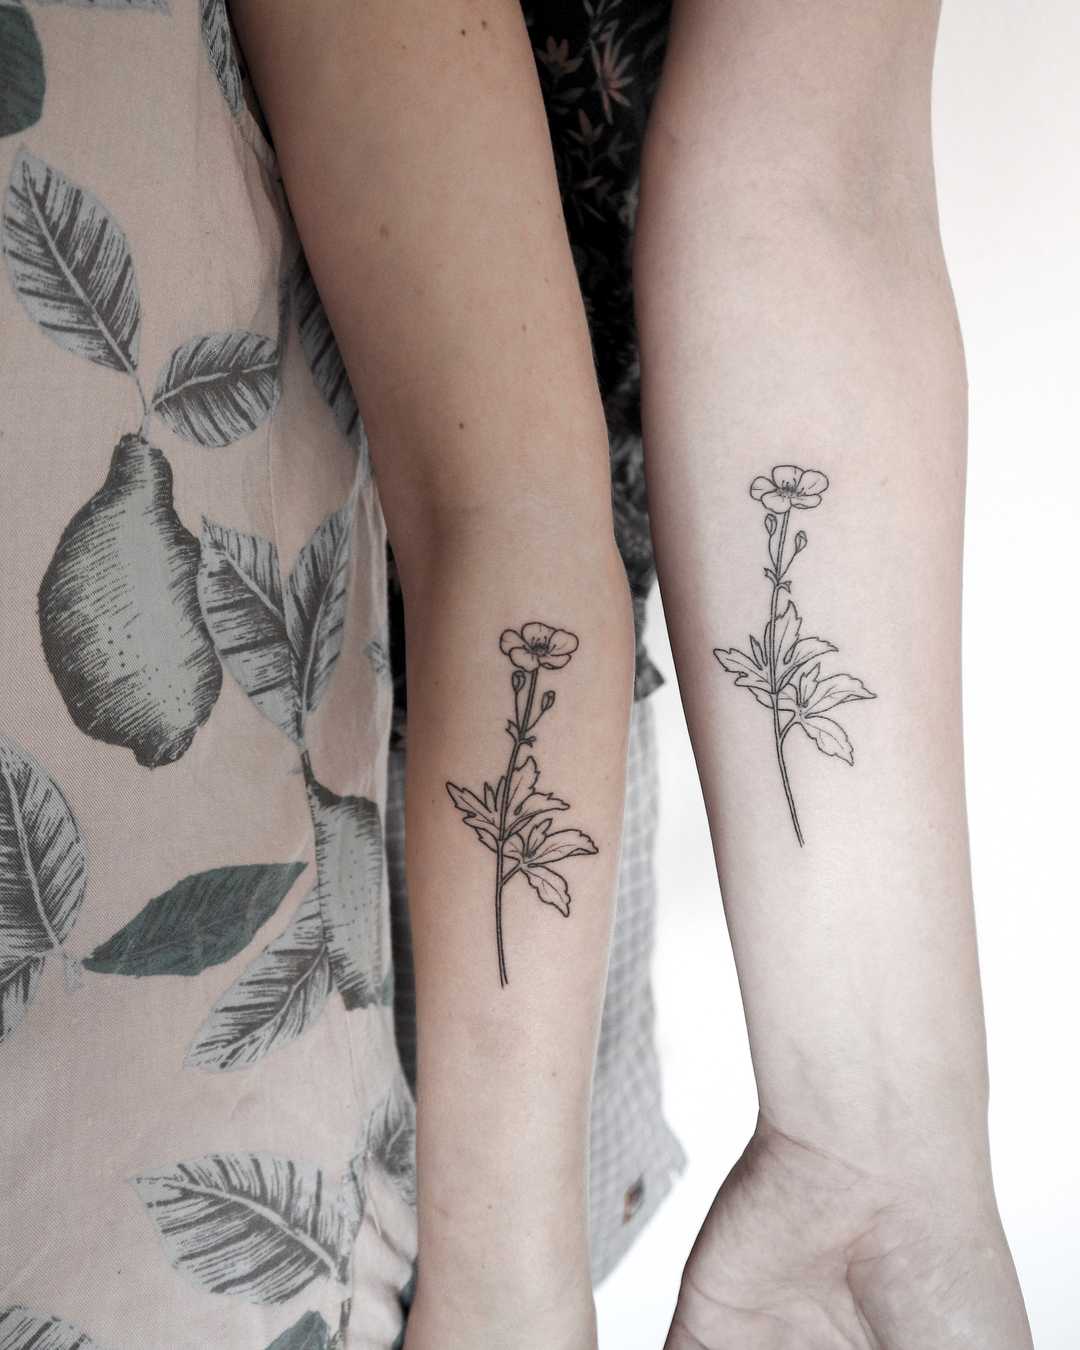 Matching buttercup tattoos by Ann Gilberg